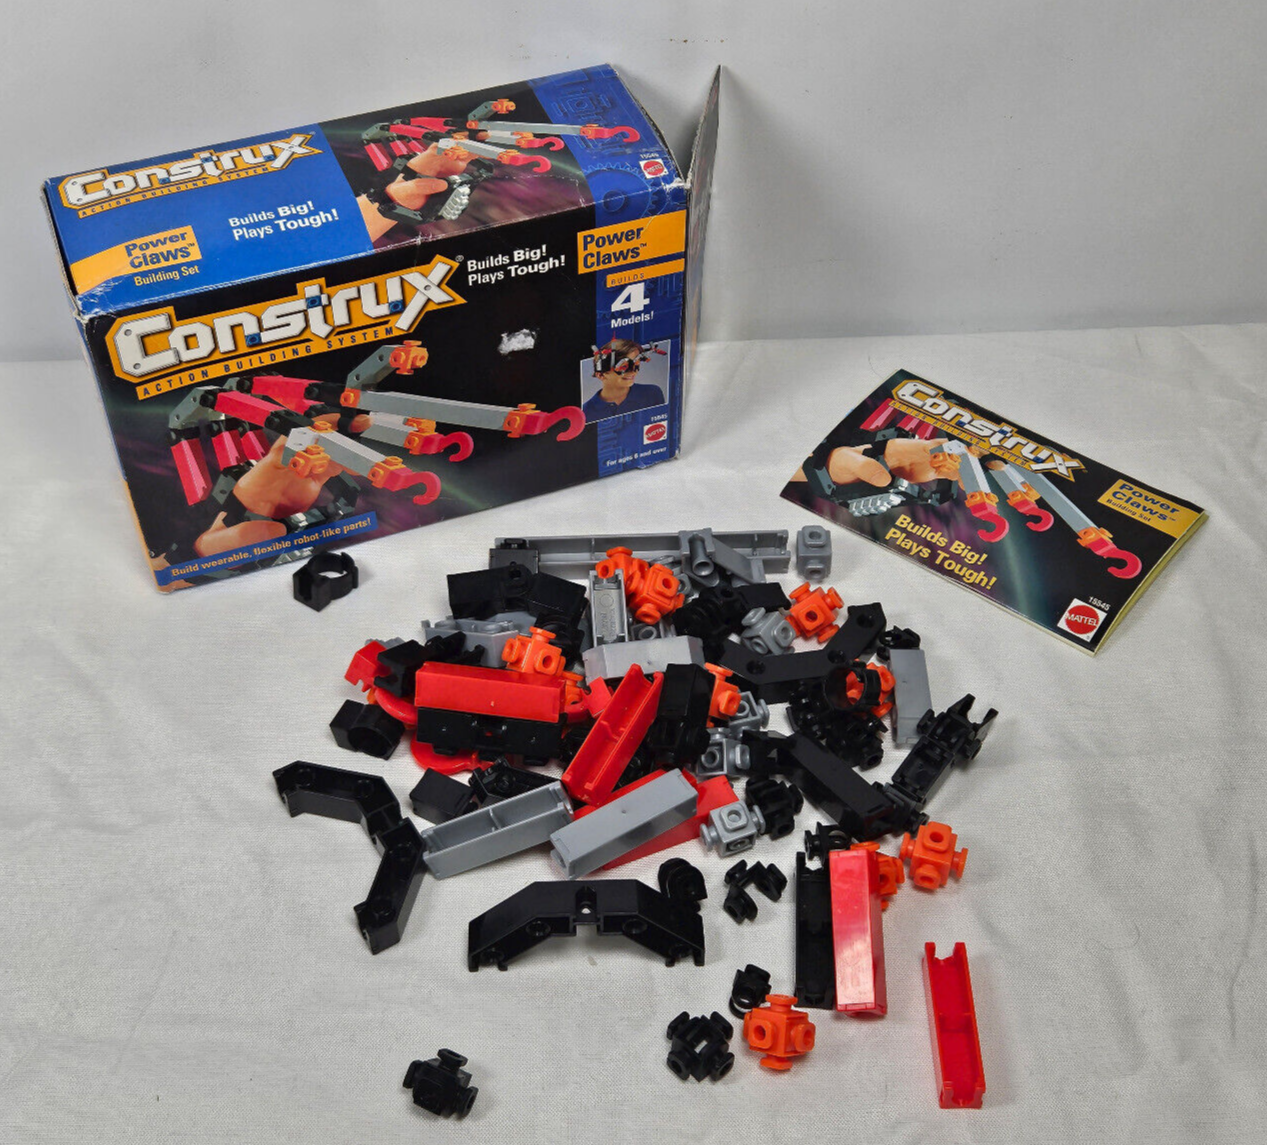 PARTS ONLY Mattel Construx Power Claws Building Set Kit Robot 1996 #15545 - $14.95